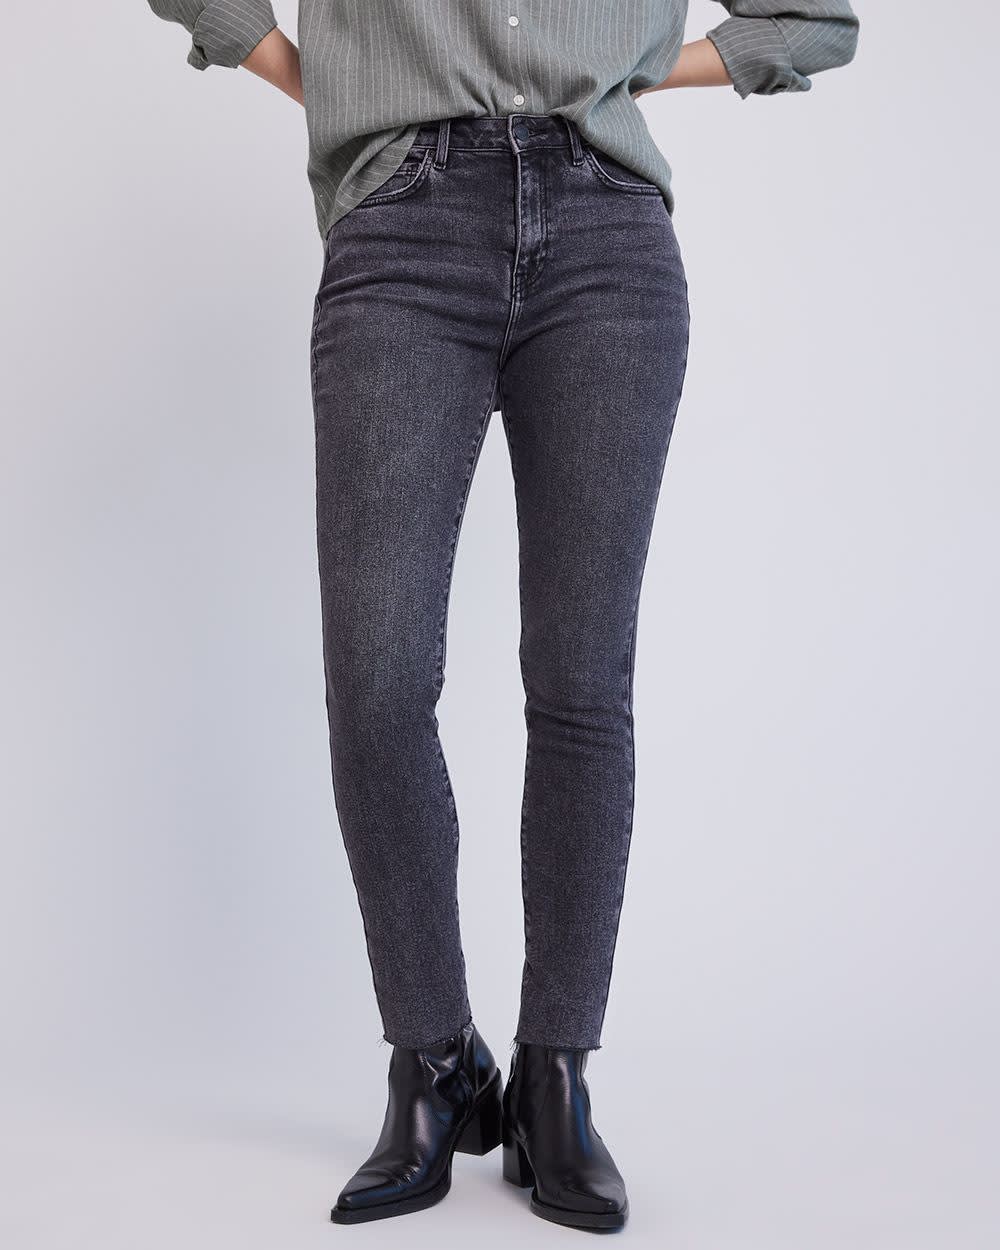 Grey High-Waisted Skinny Jeans | RW&CO.